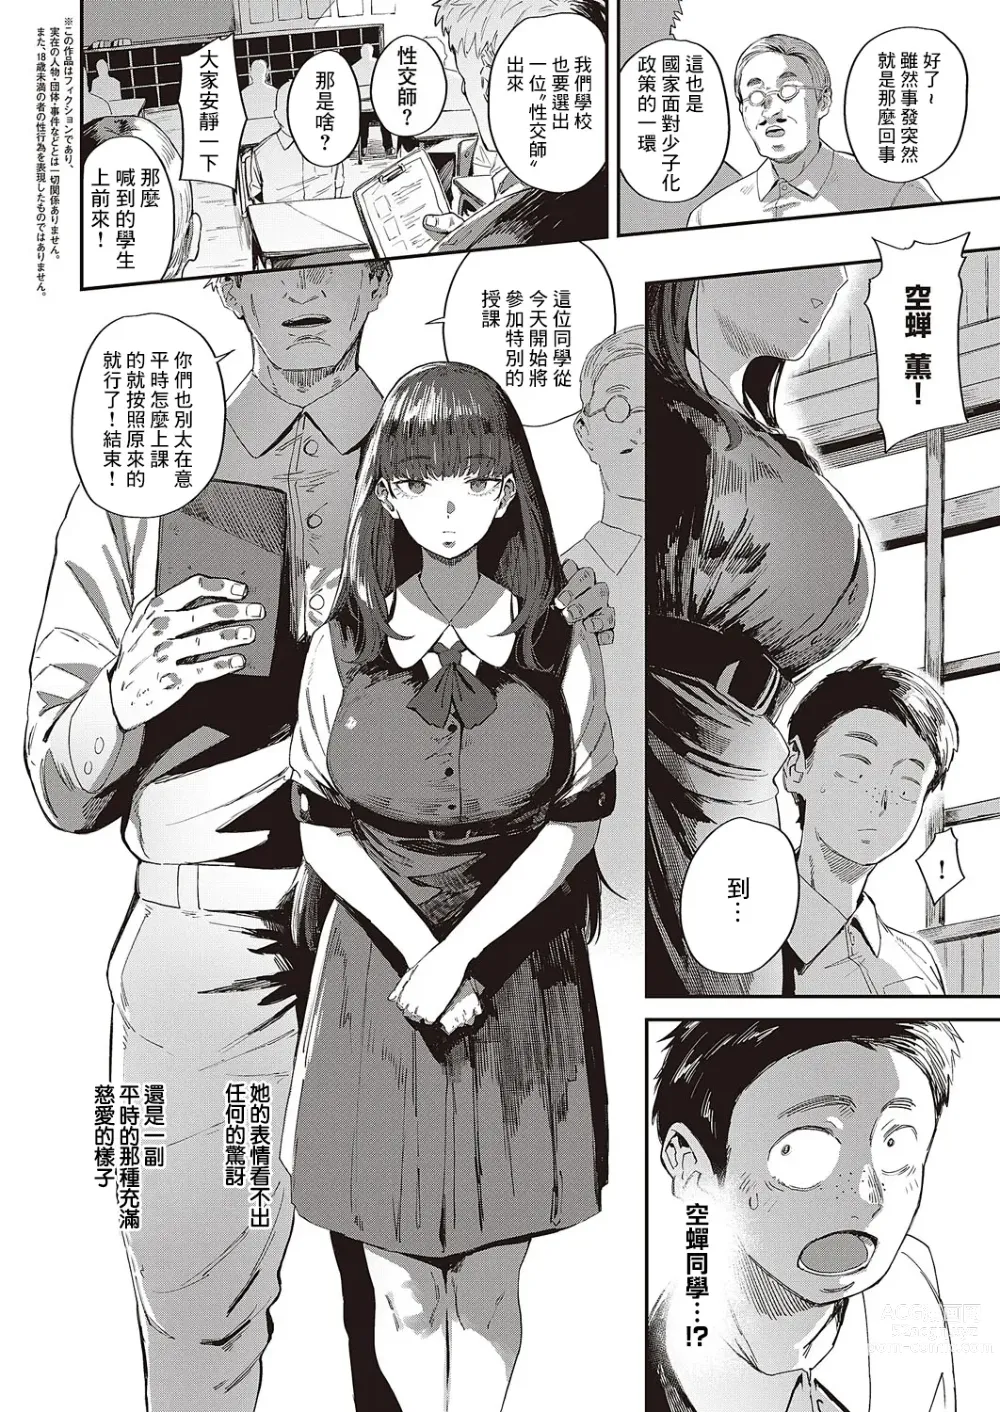 Page 2 of manga Semishigure no Tenkousei